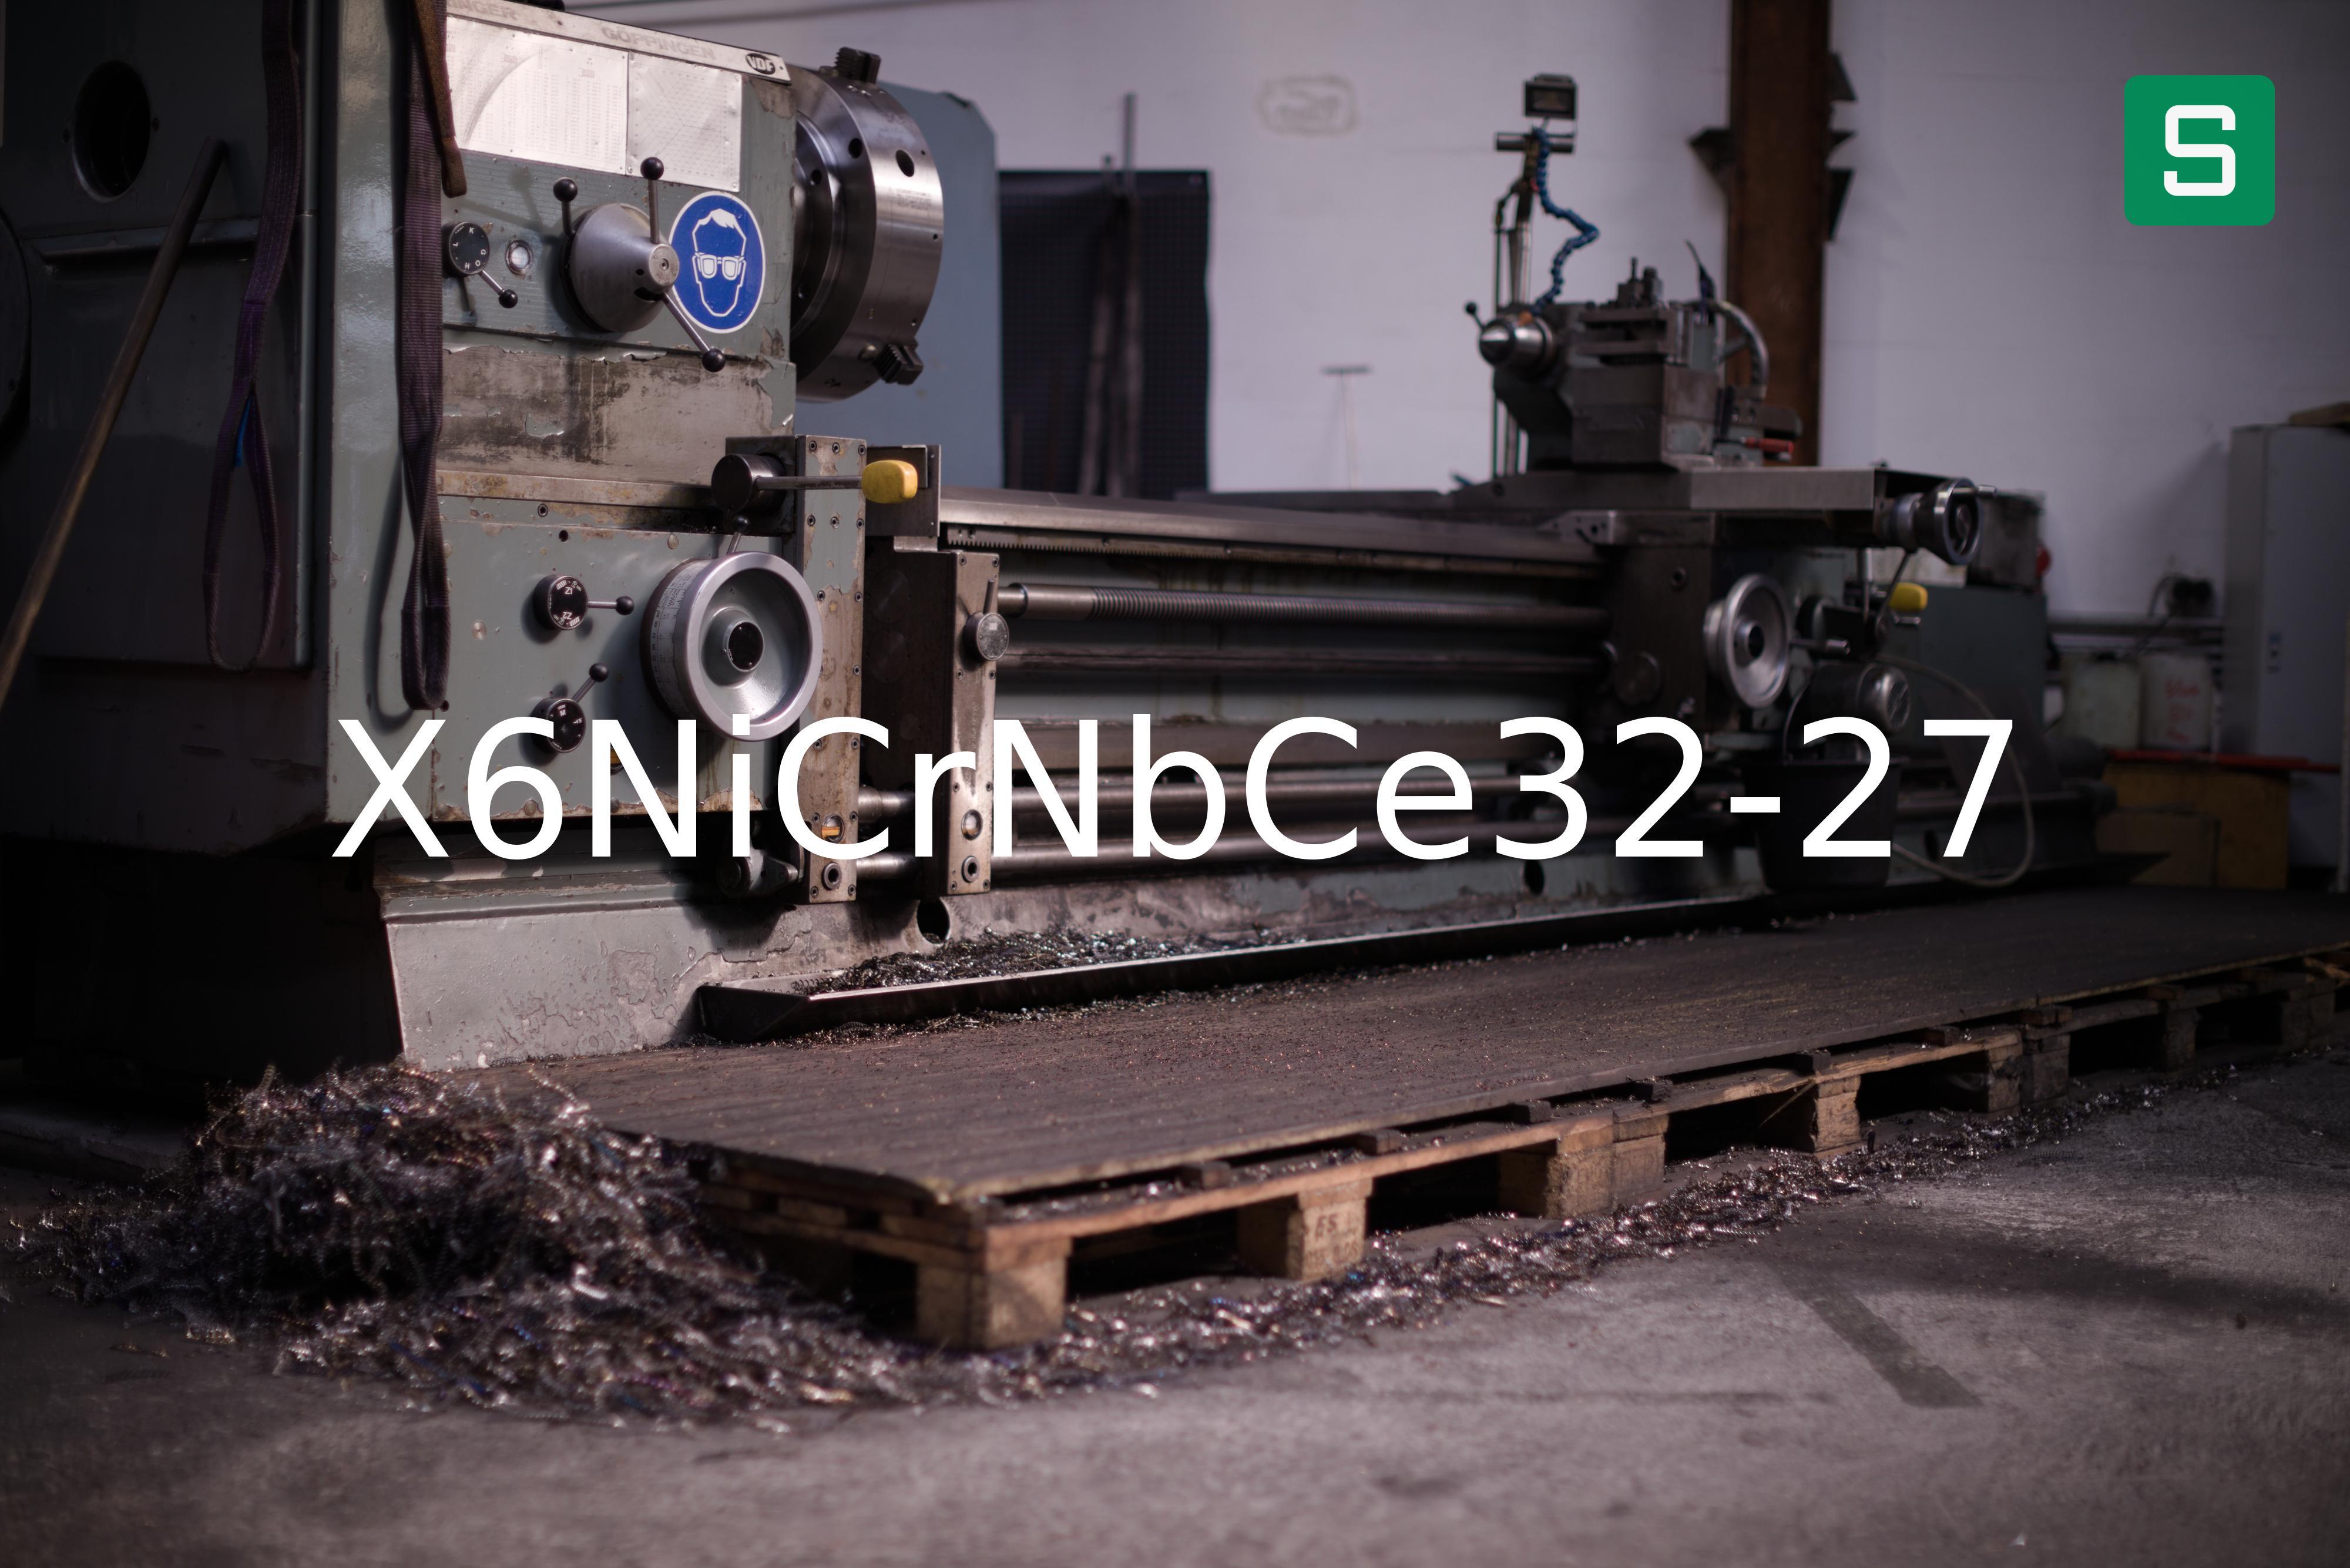 Steel Material: X6NiCrNbCe32-27